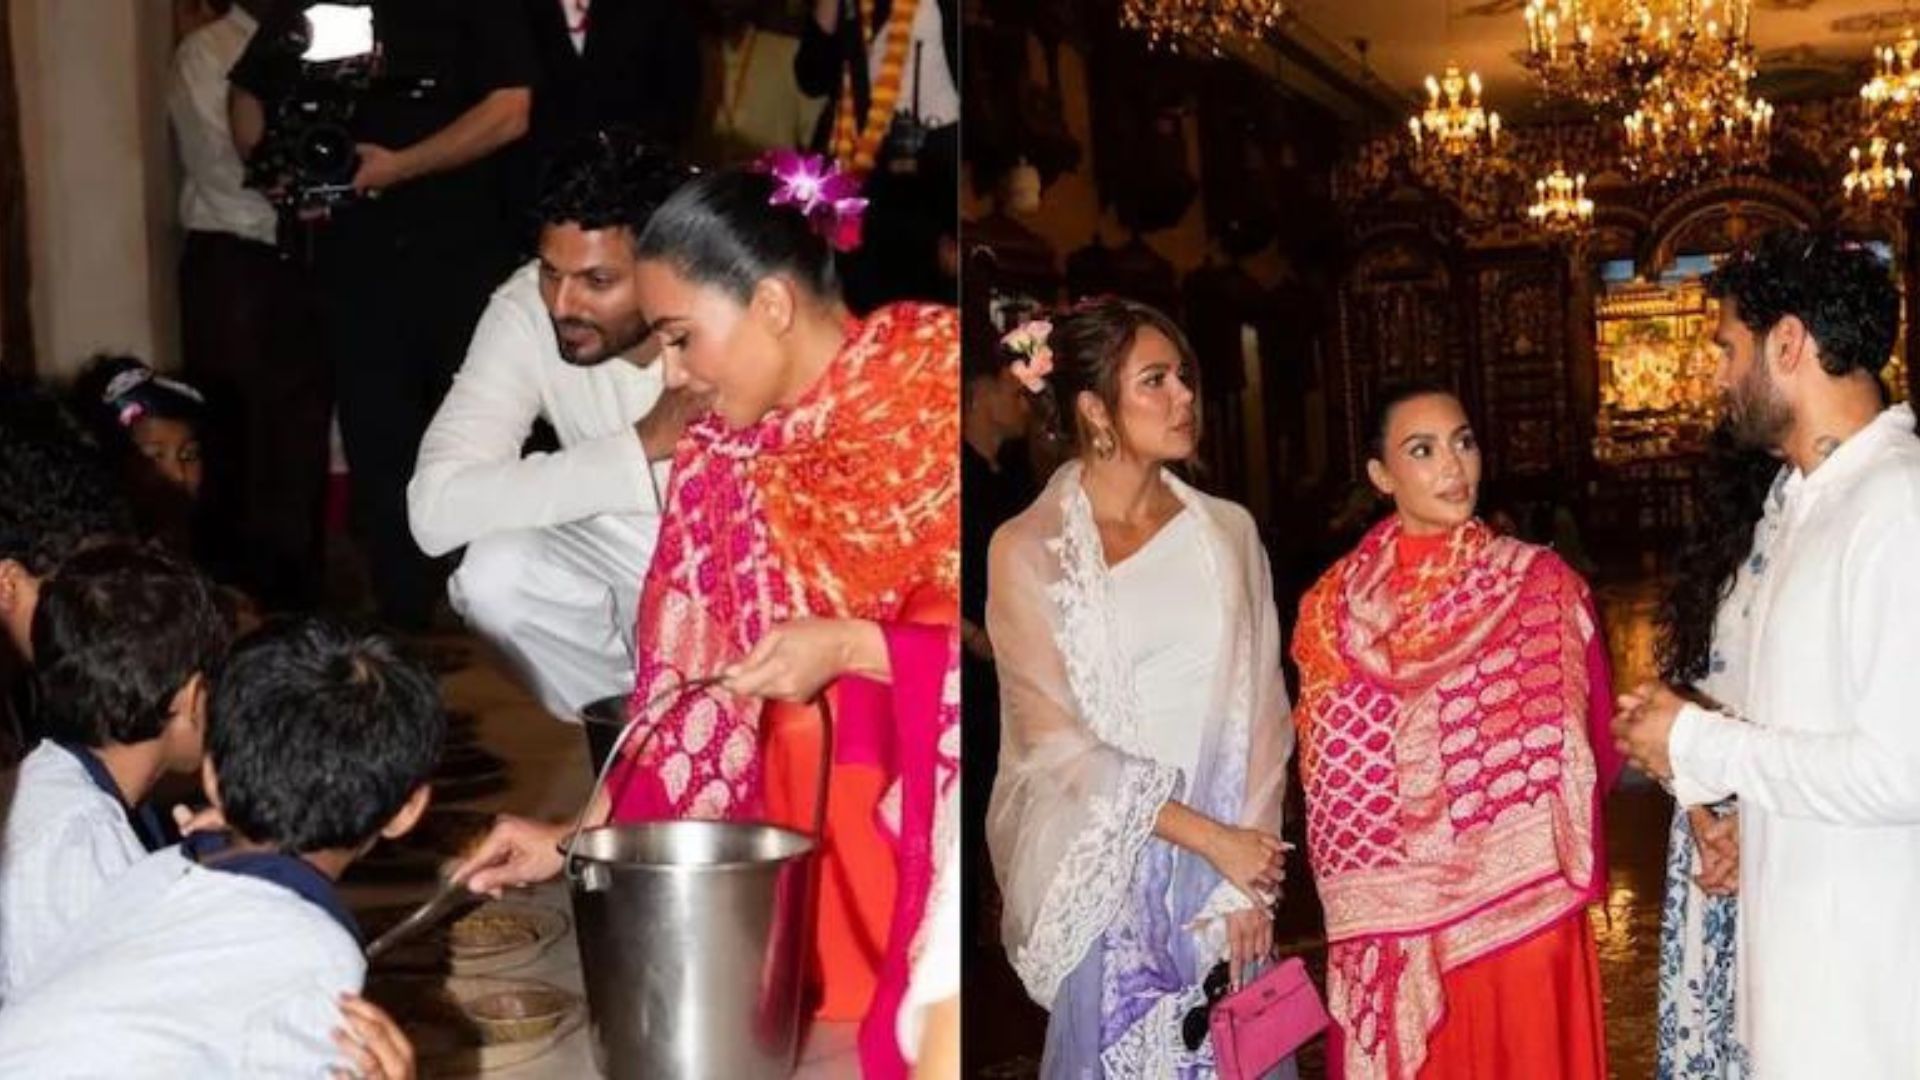 Kim Kardashian Wears ₹2 Lakh Dress To Serve Food At Mumbai’s ISKCON Temple